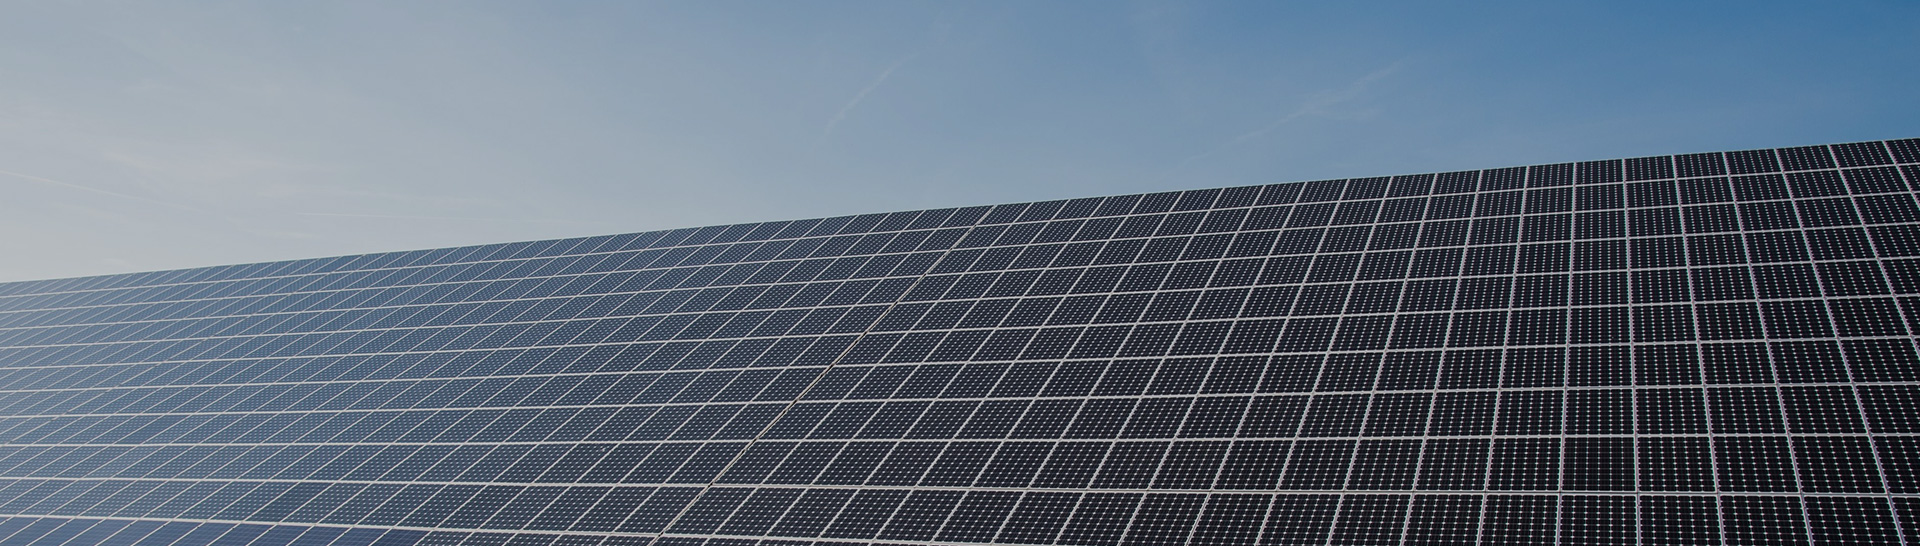 best commercial solar Installation Companies in australia